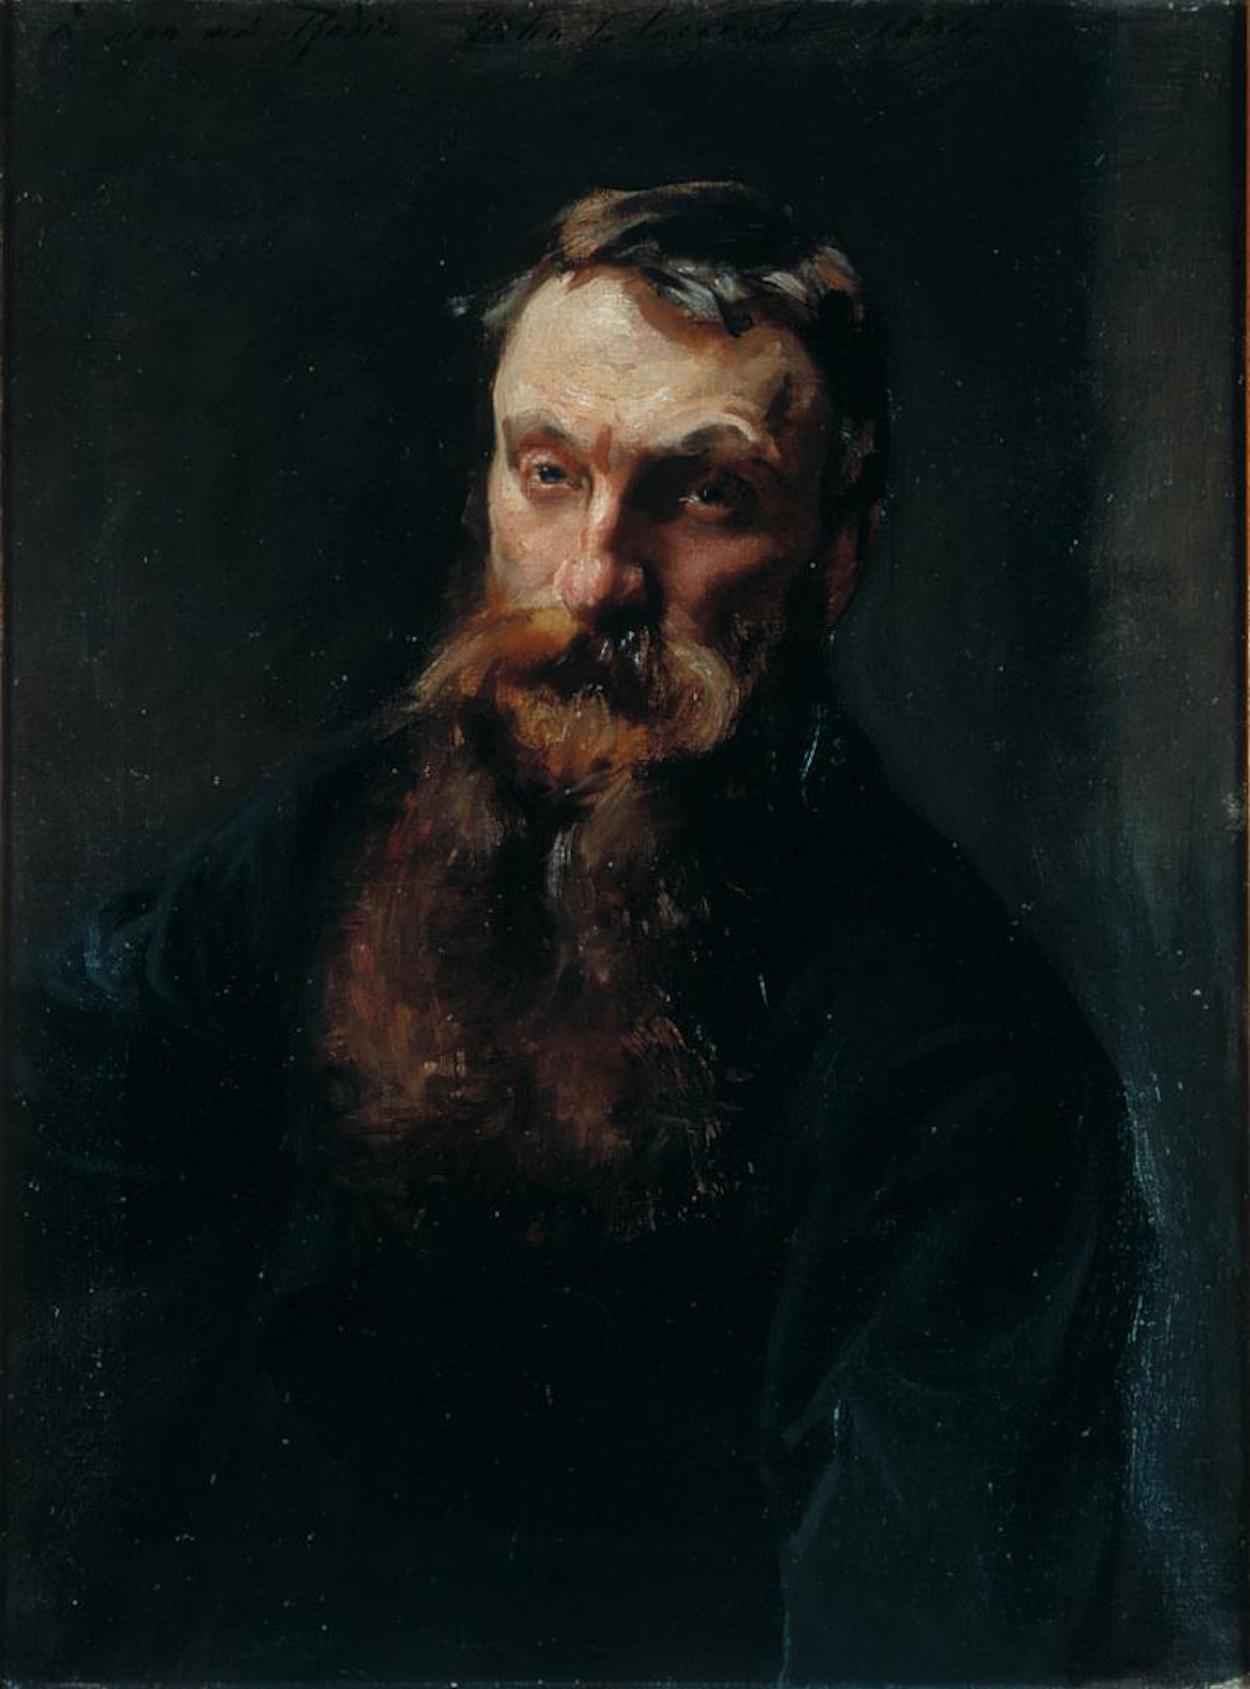 Portretul lui Rodin by John Singer Sargent - 1884 - 72 x 53 cm 